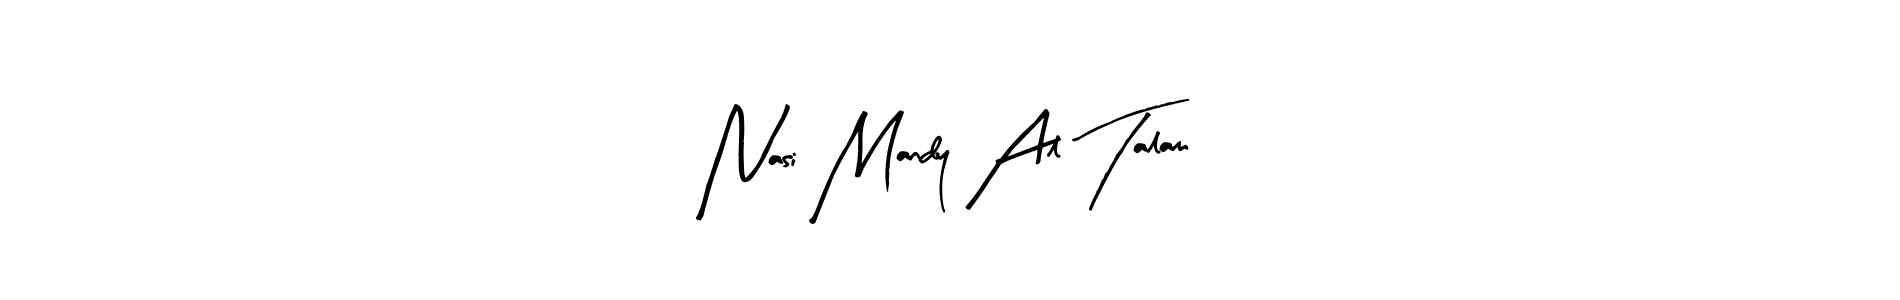 How to Draw Nasi Mandy Al Talam signature style? Arty Signature is a latest design signature styles for name Nasi Mandy Al Talam. Nasi Mandy Al Talam signature style 8 images and pictures png